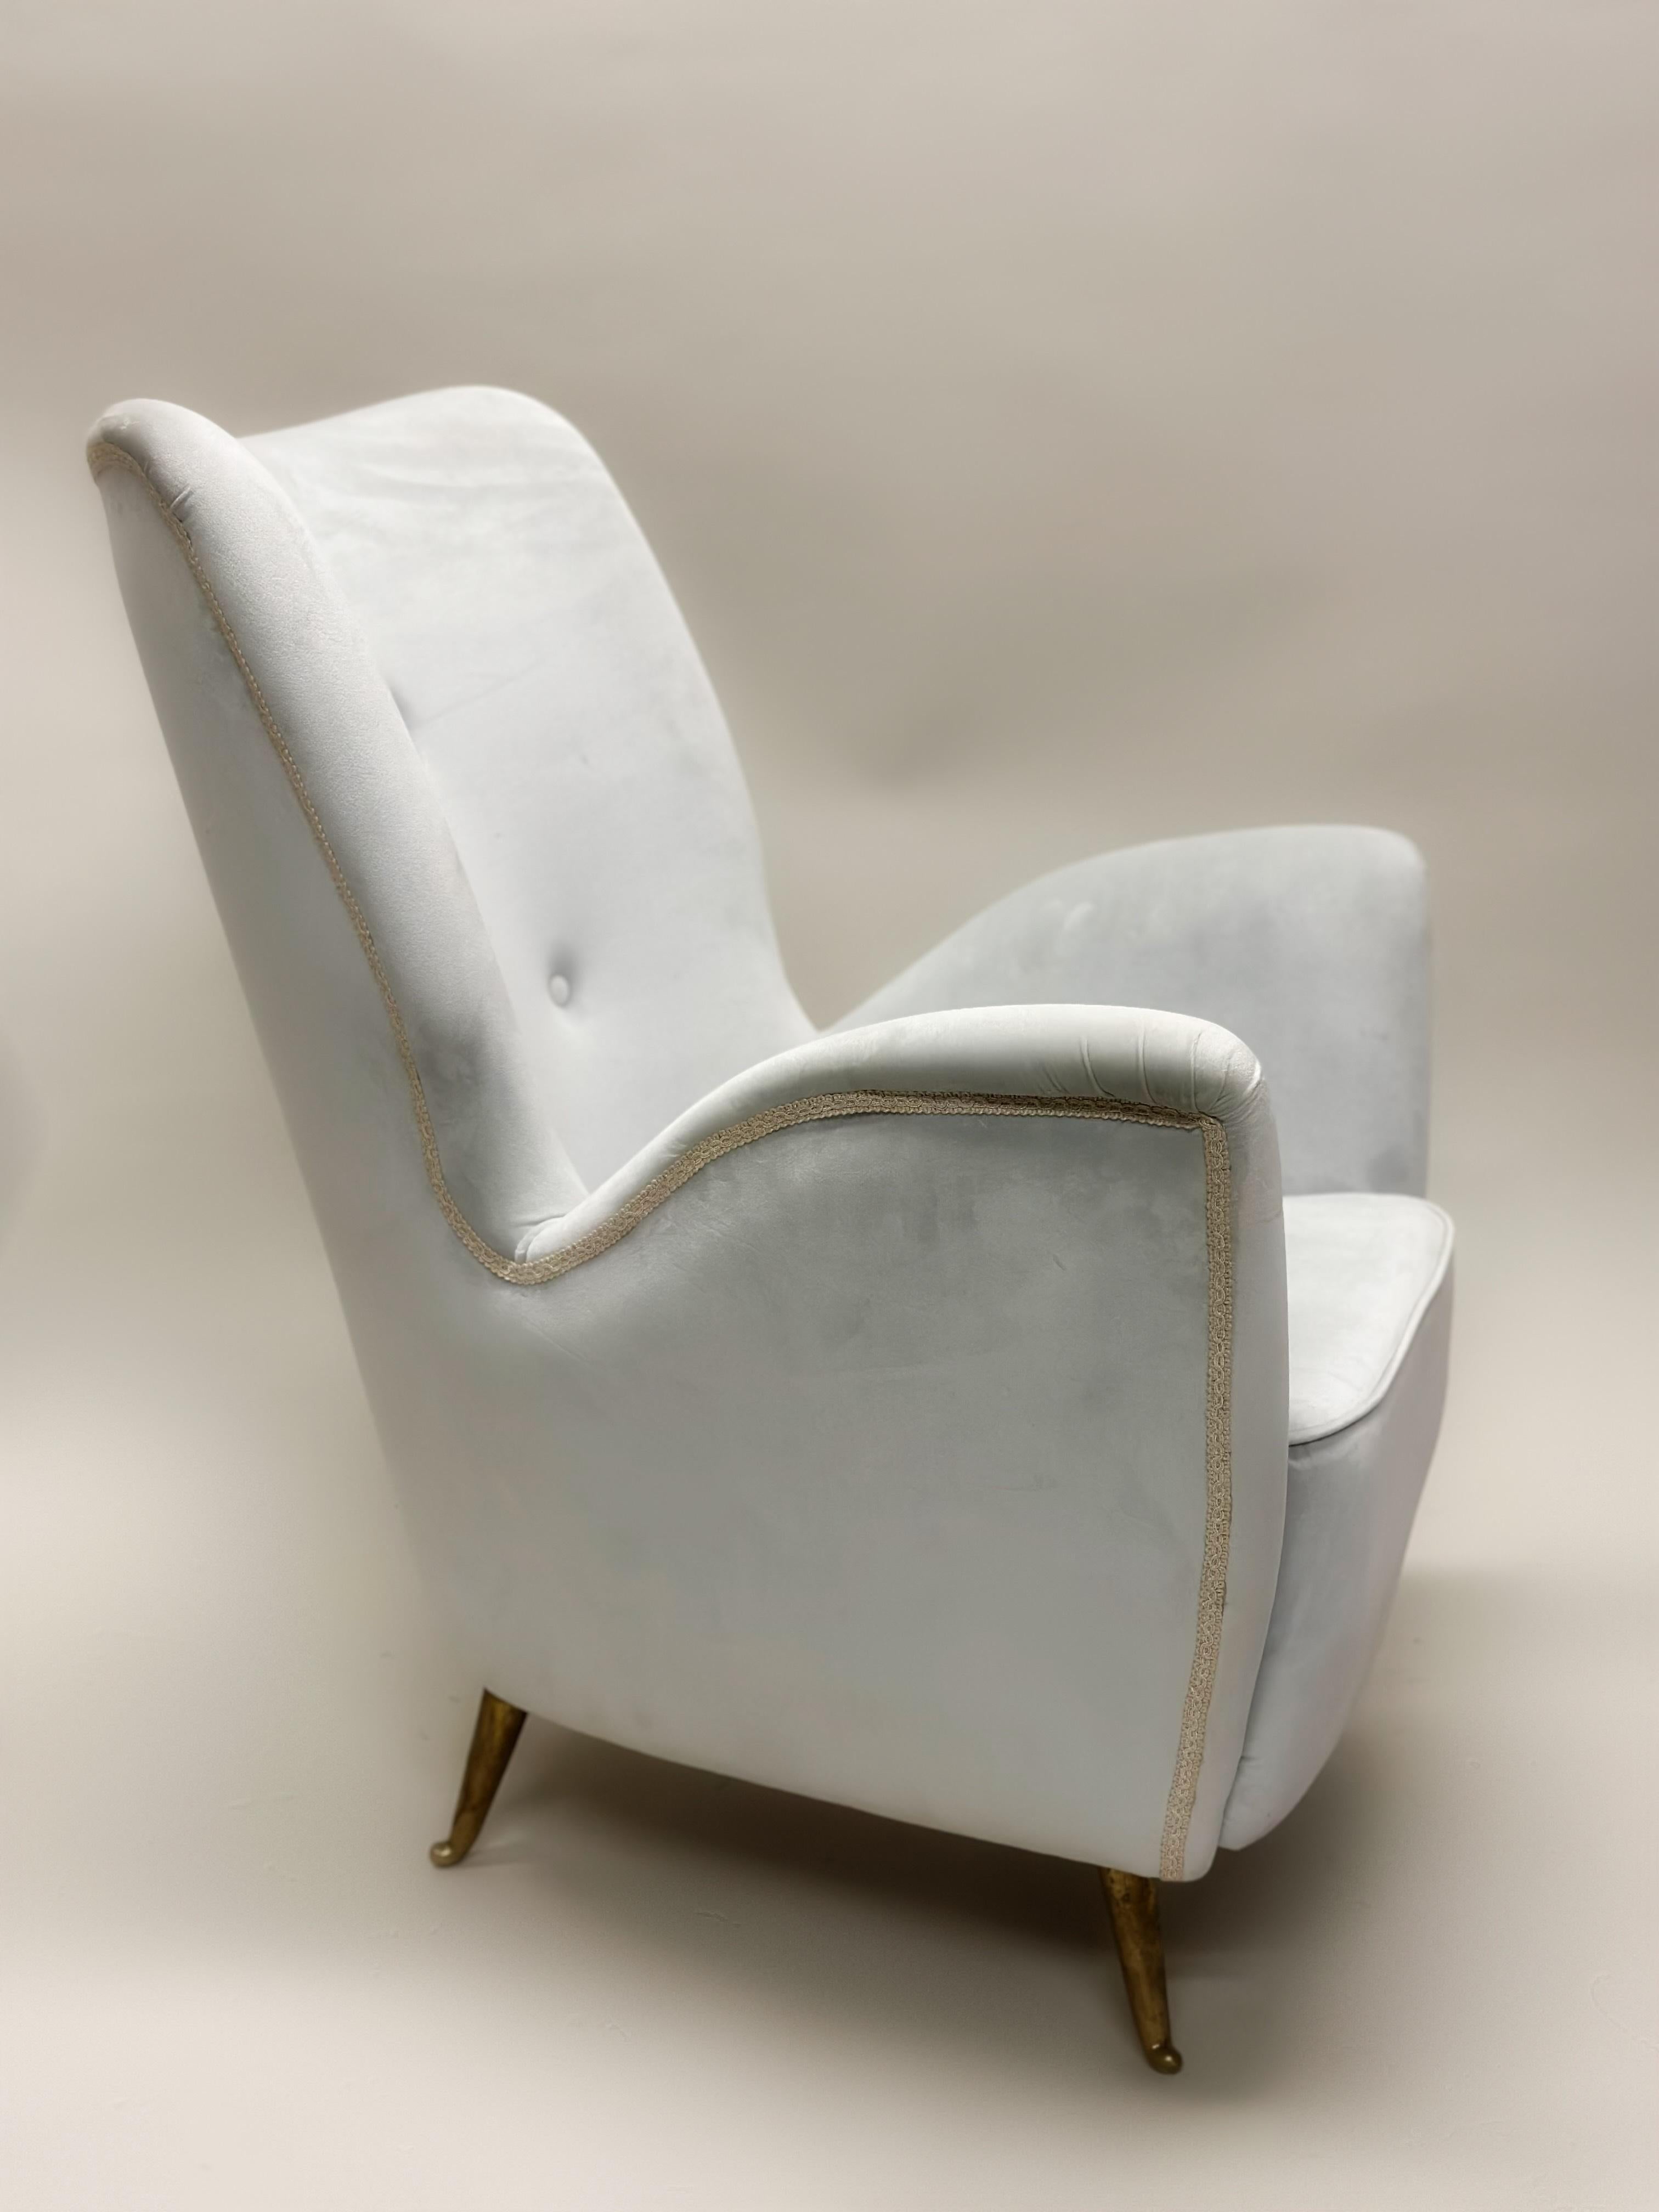 Pair of Italian Mid-Century Modern Lounge Chairs by Isa Bergamo & Att Gio Ponti  For Sale 1